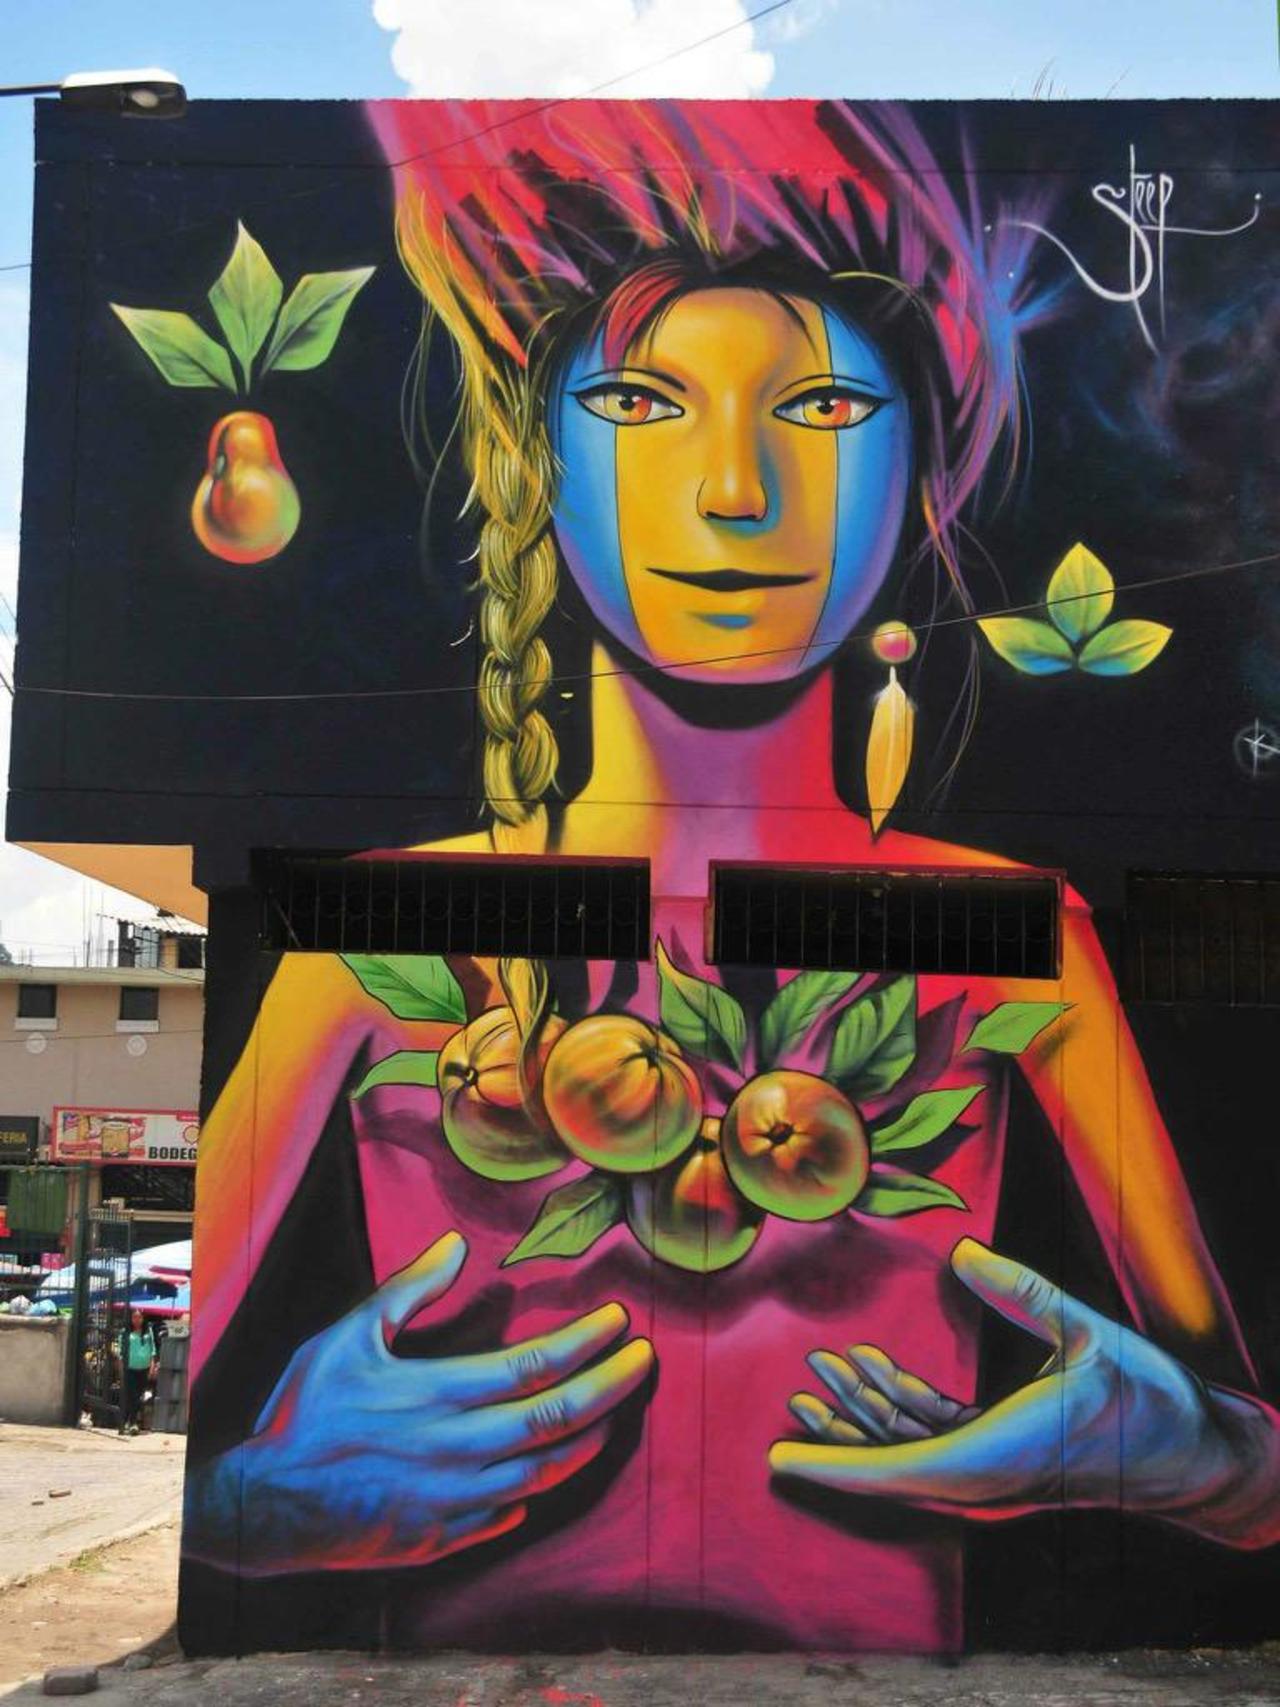 RT:GoogleStreetArt Street Art by Steep

#art #graffiti #mural #streetart http://t.co/fa1kkQWjNz